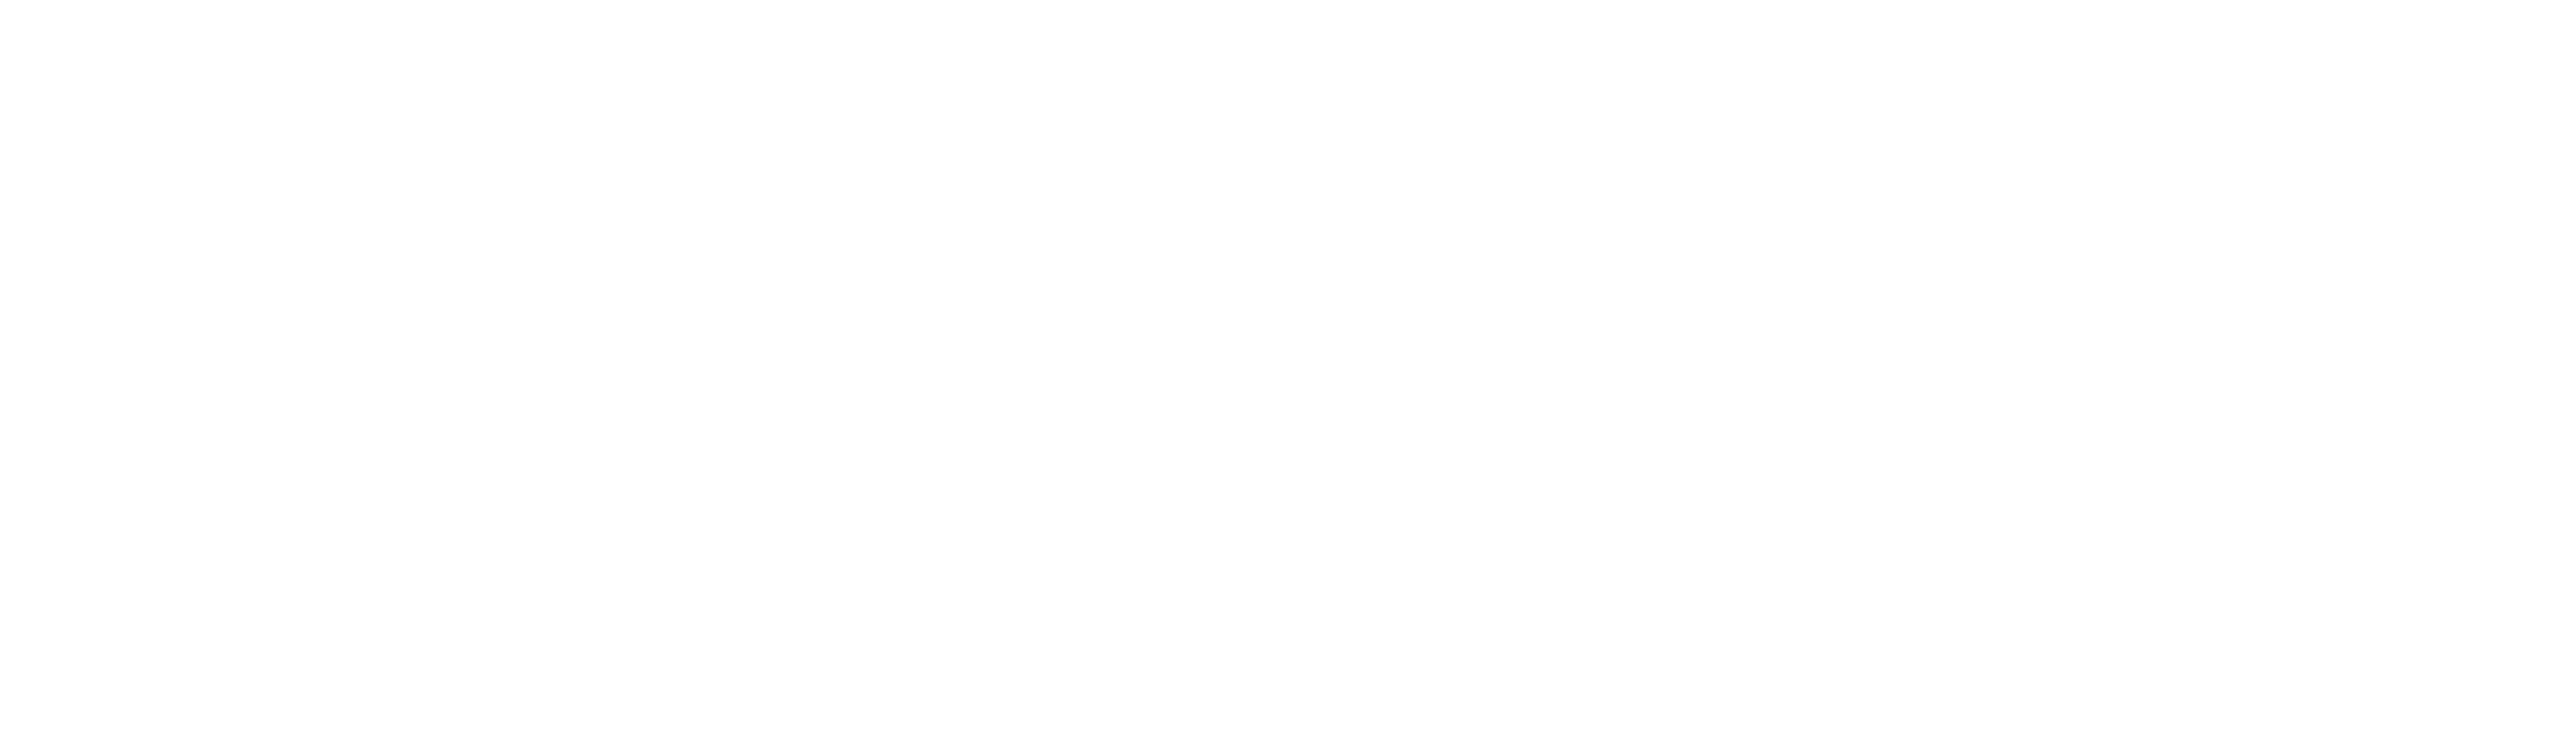 Wedeka logo